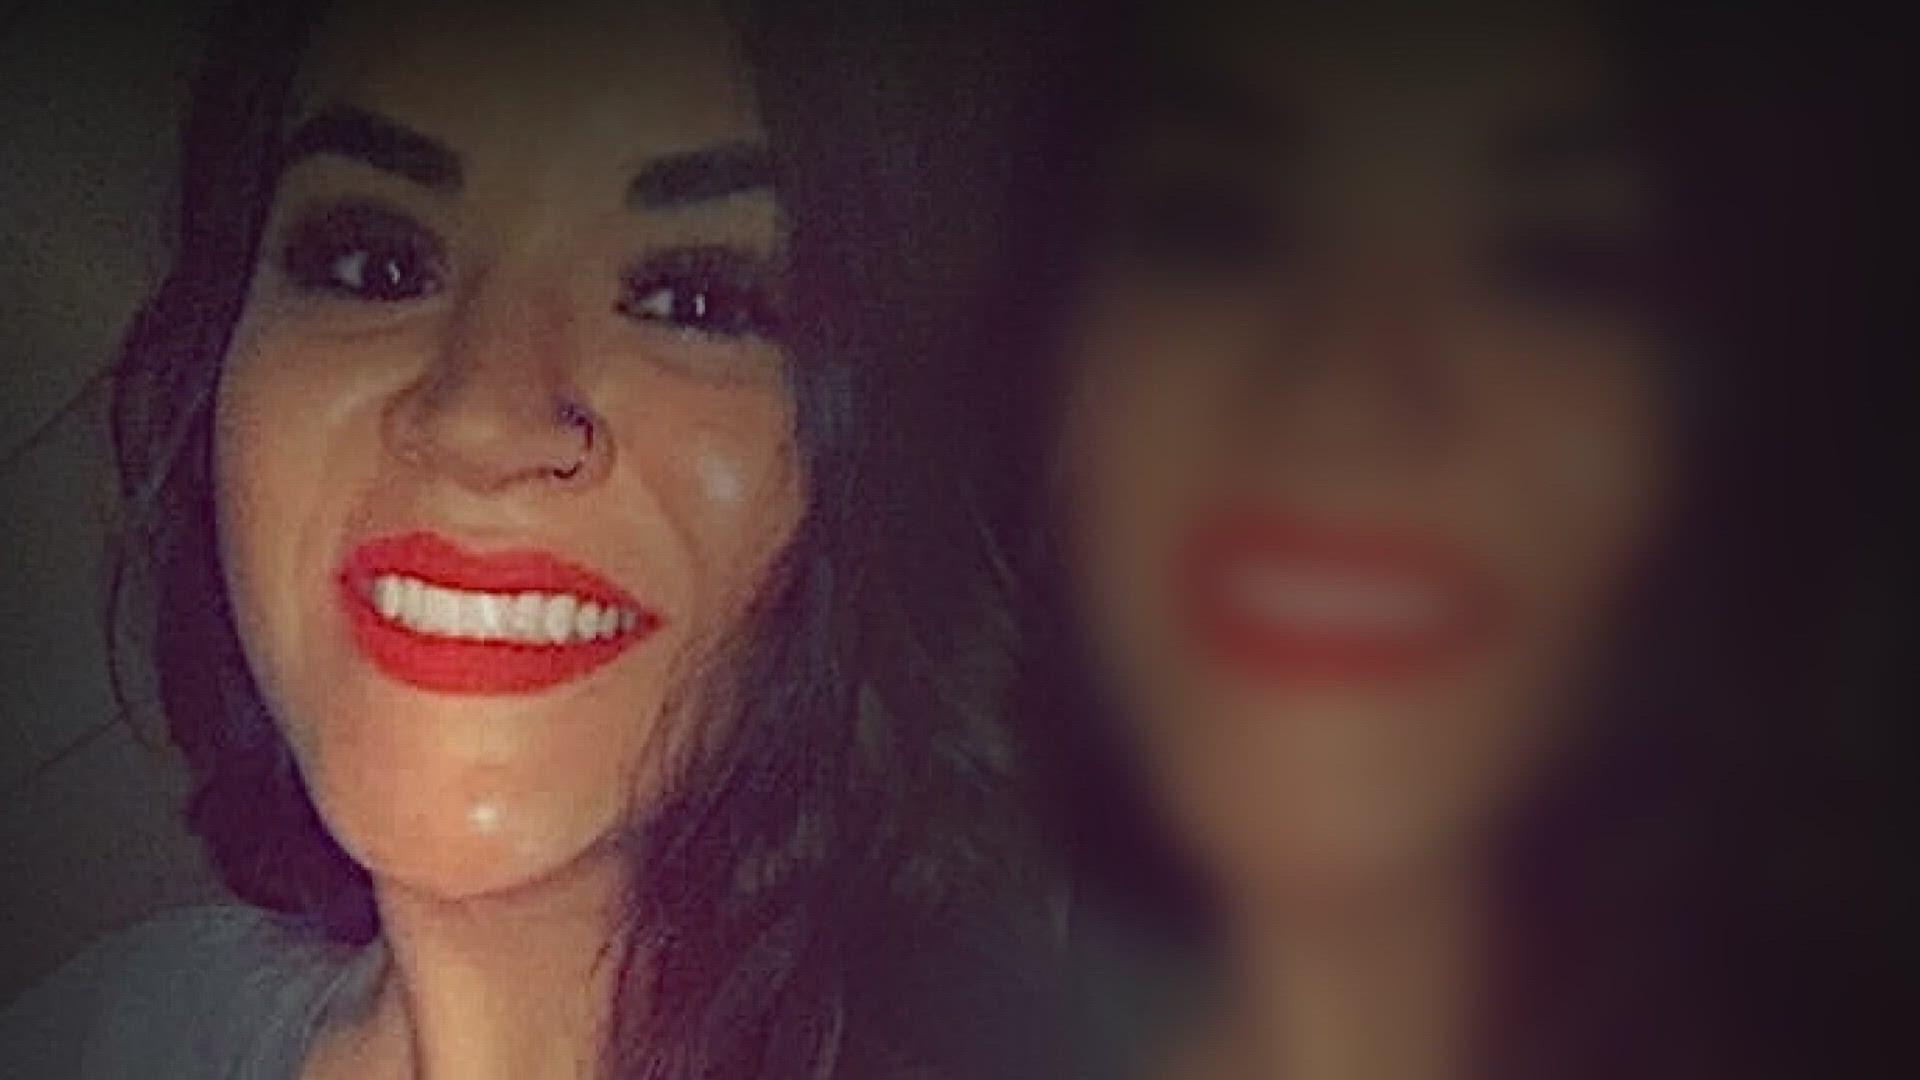 31-year-old Susana Longoria was among four people killed in the I-35W pileup involving two semi-trucks last week.